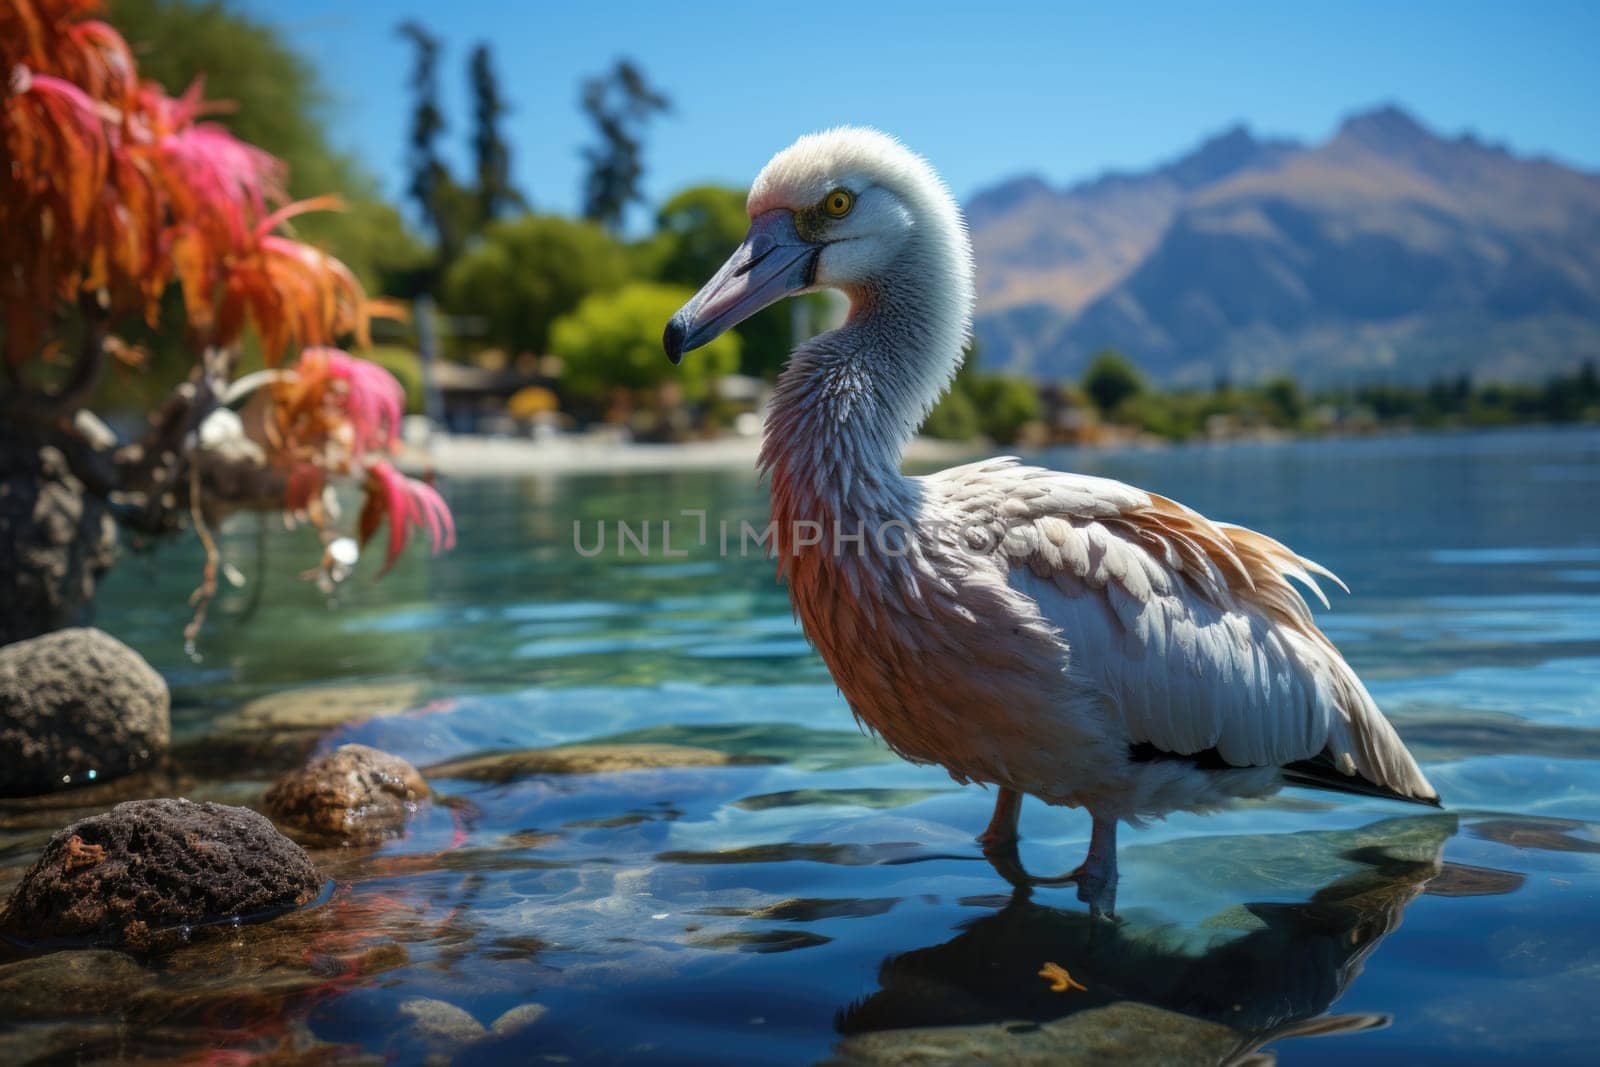 A large bird on the water near the island of Tahiti. Bird by Lobachad